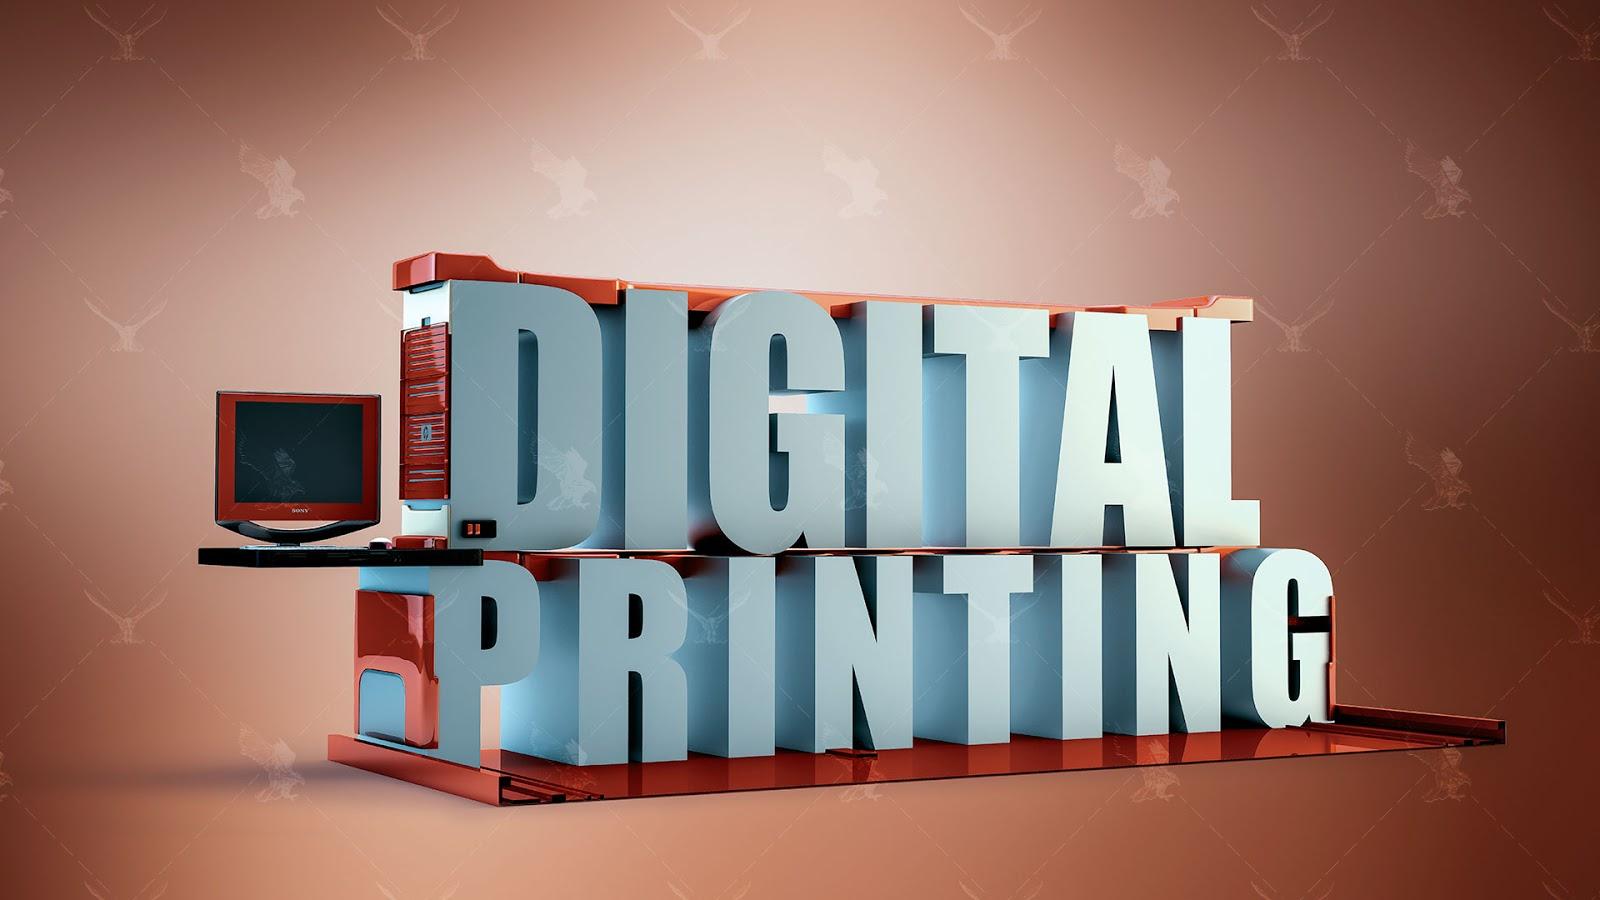 Digitally Printed Wallpaper - Digital Printing Wallpaper Hd - 1600x900